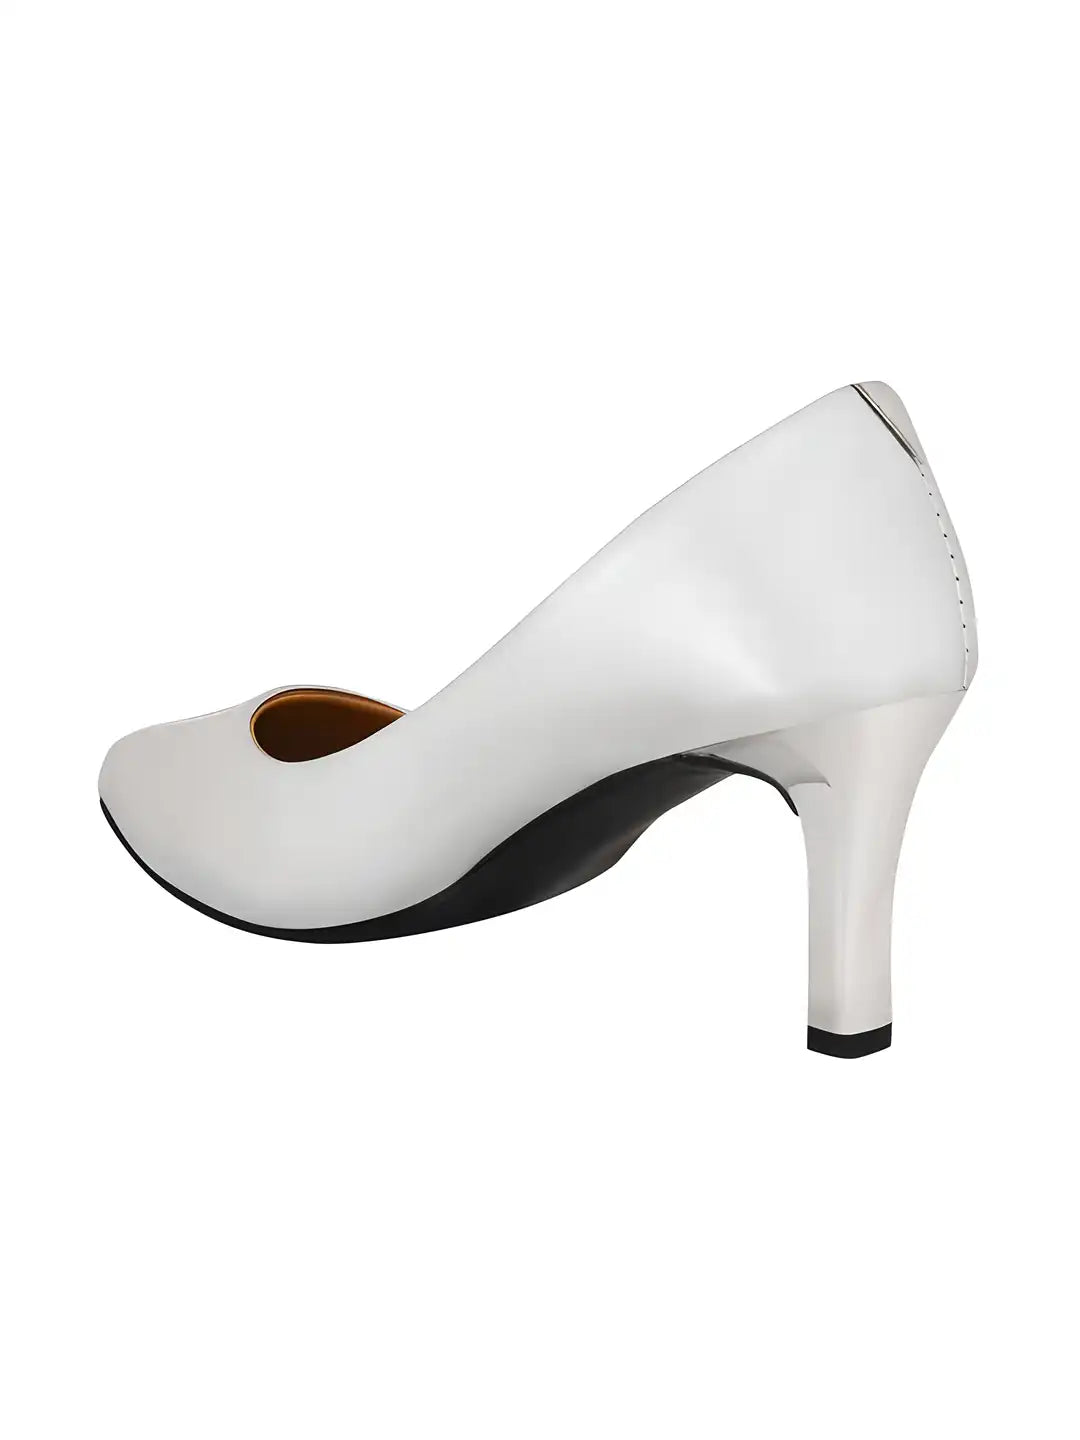 Women's Fashion Pointed Stiletto Heel Pump Shoes